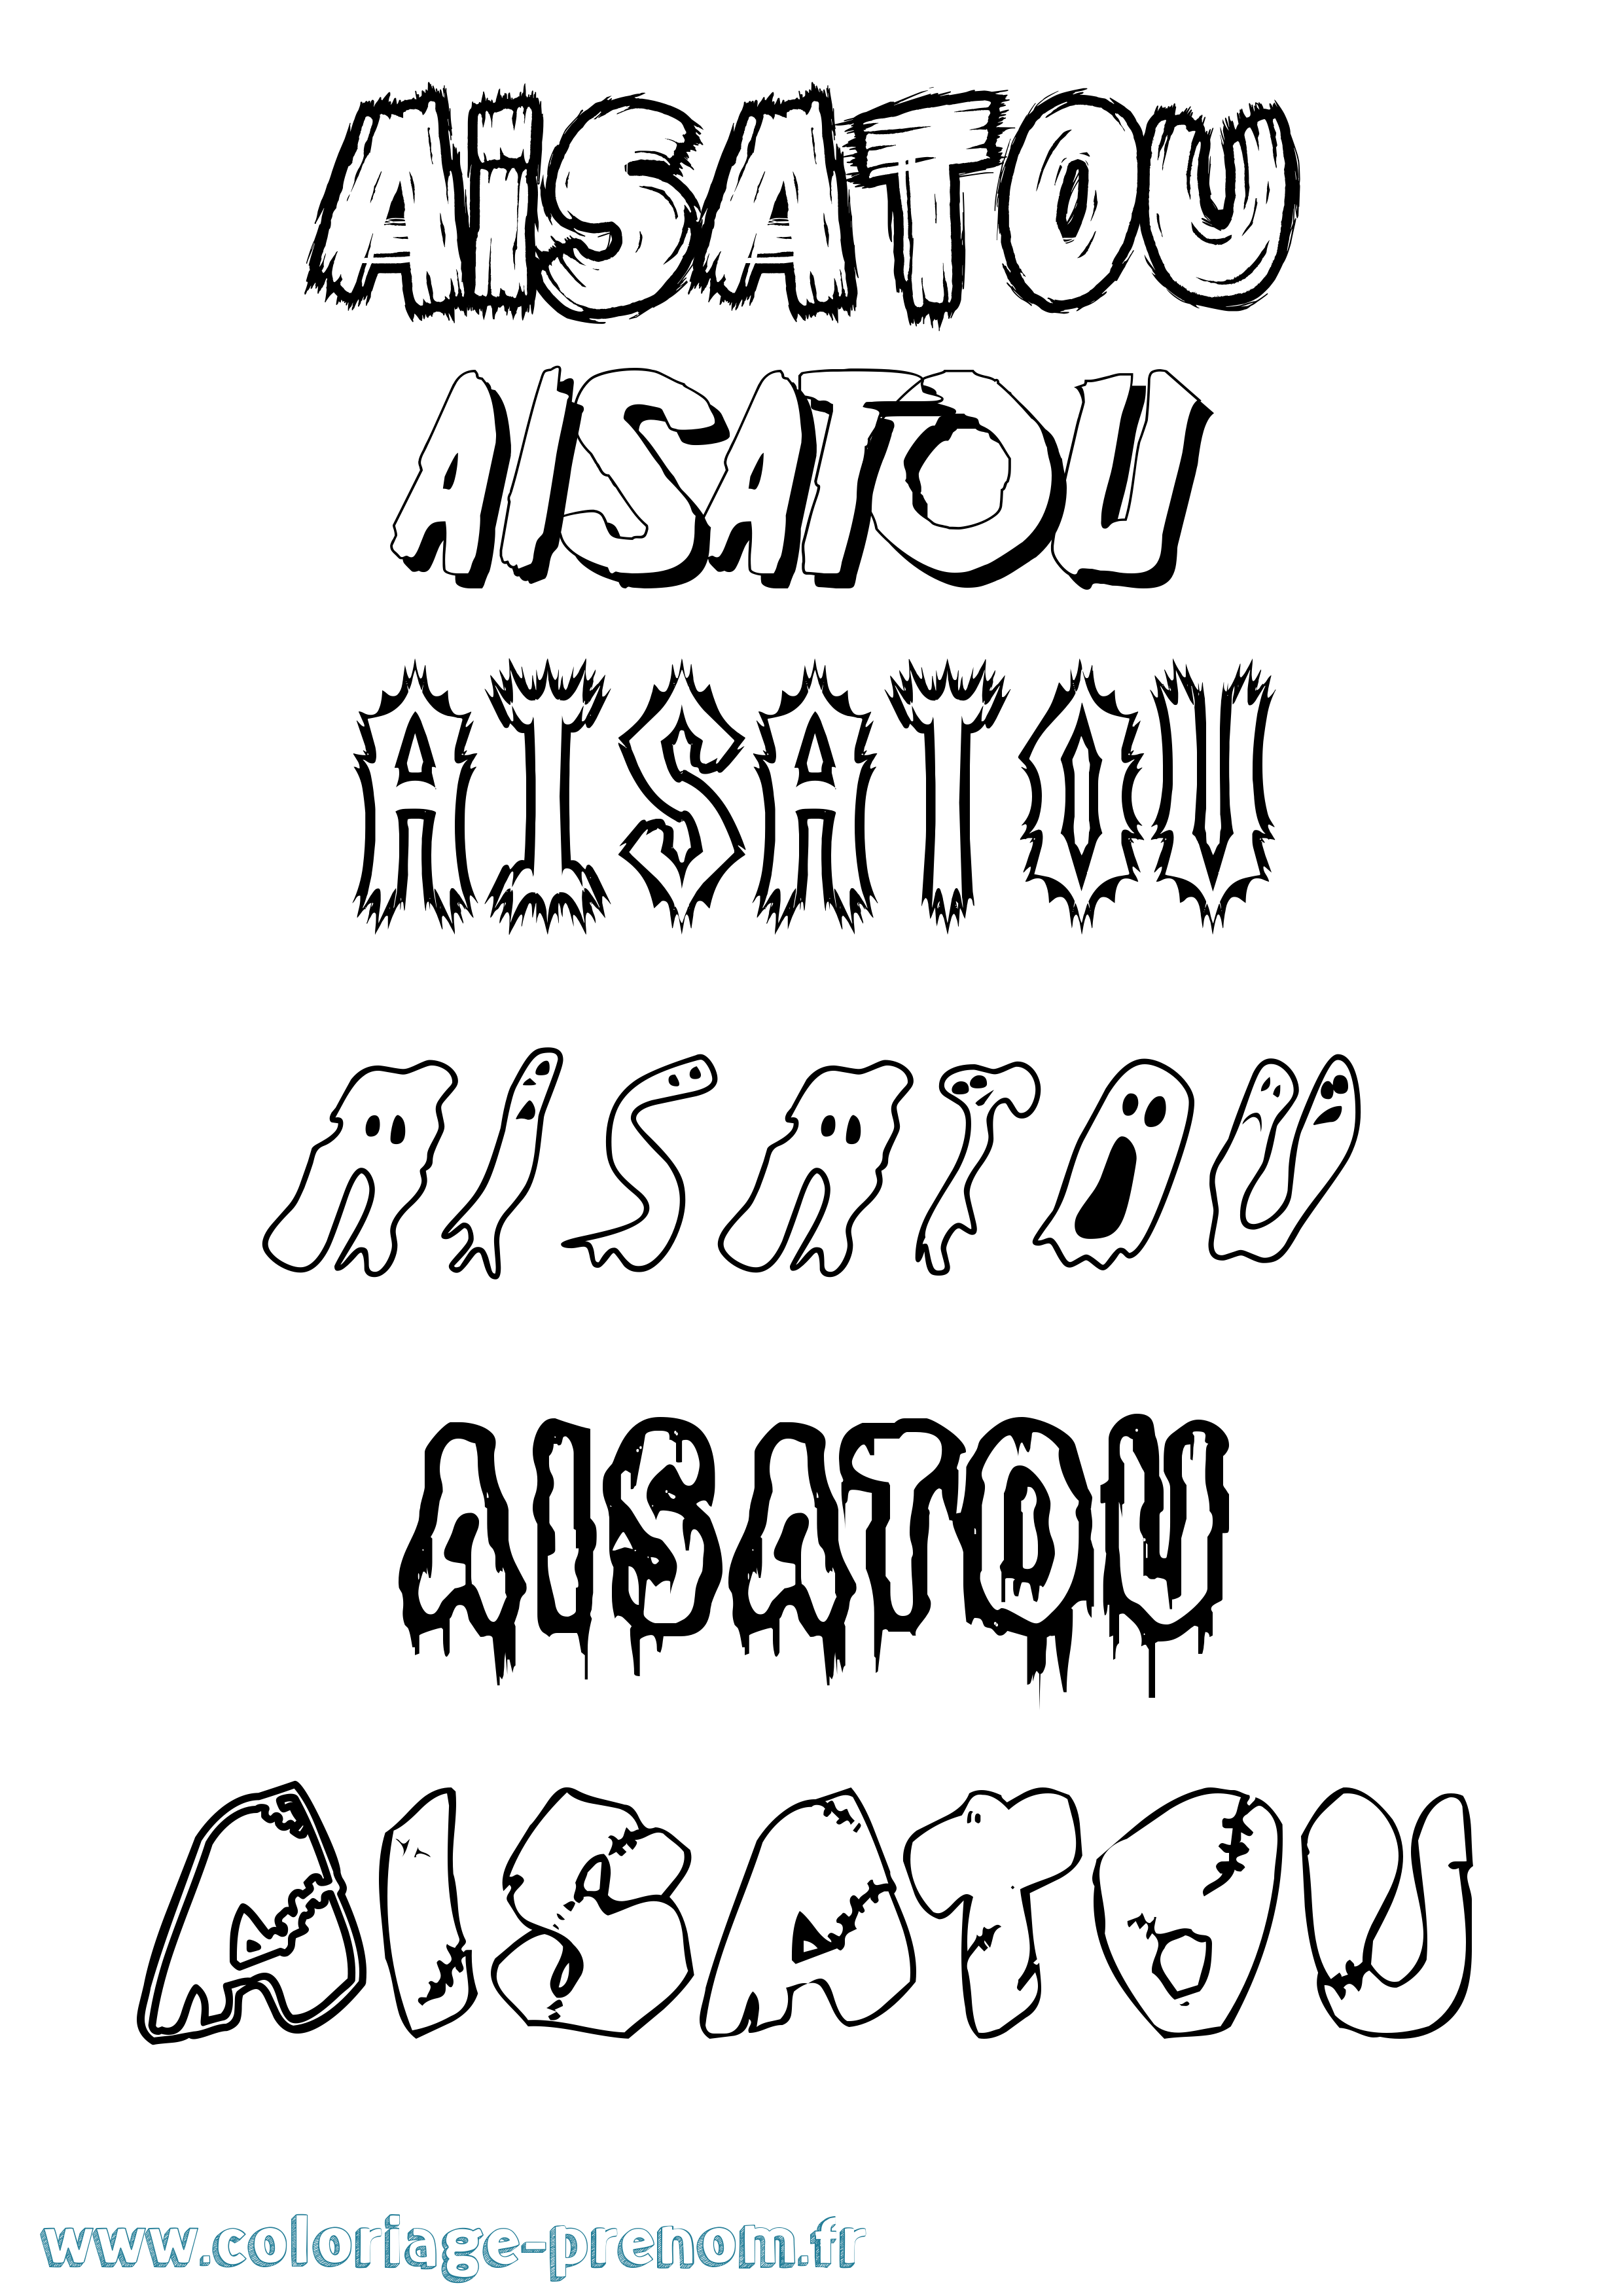 Coloriage prénom Aisatou Frisson